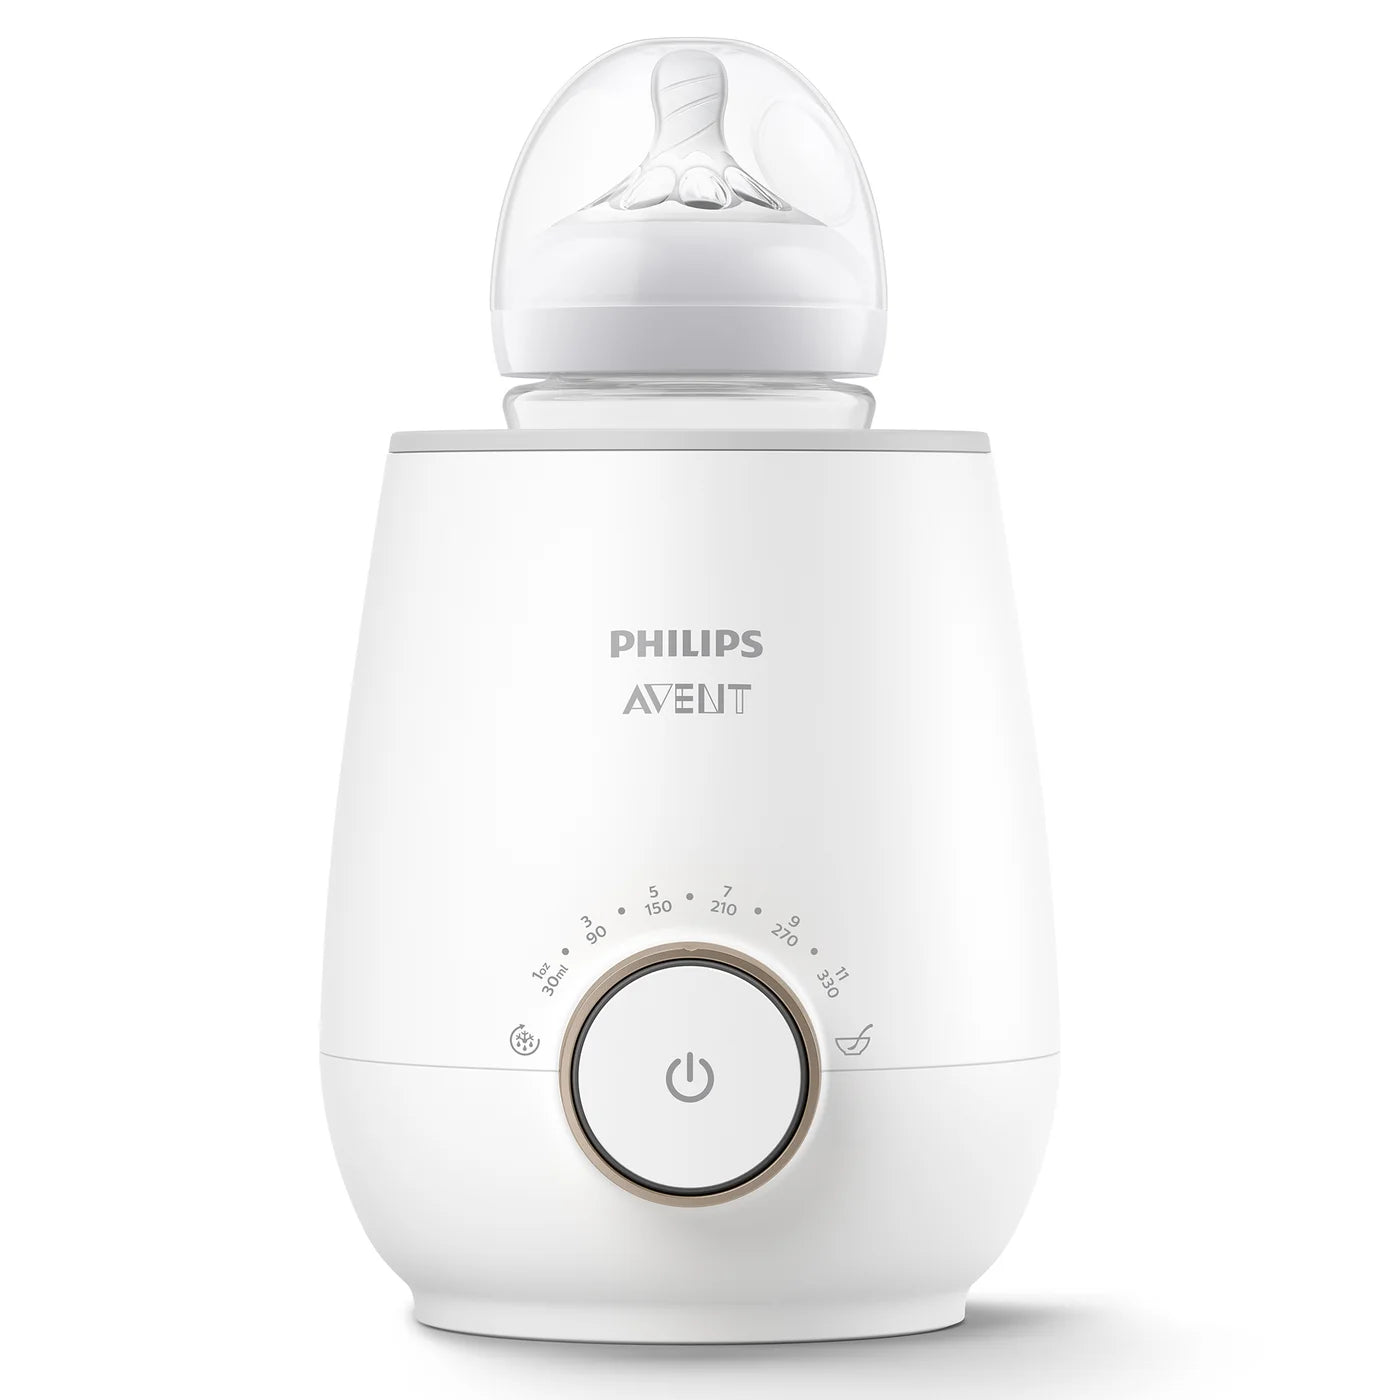 Philips Avent - Baby Bottle Warmer